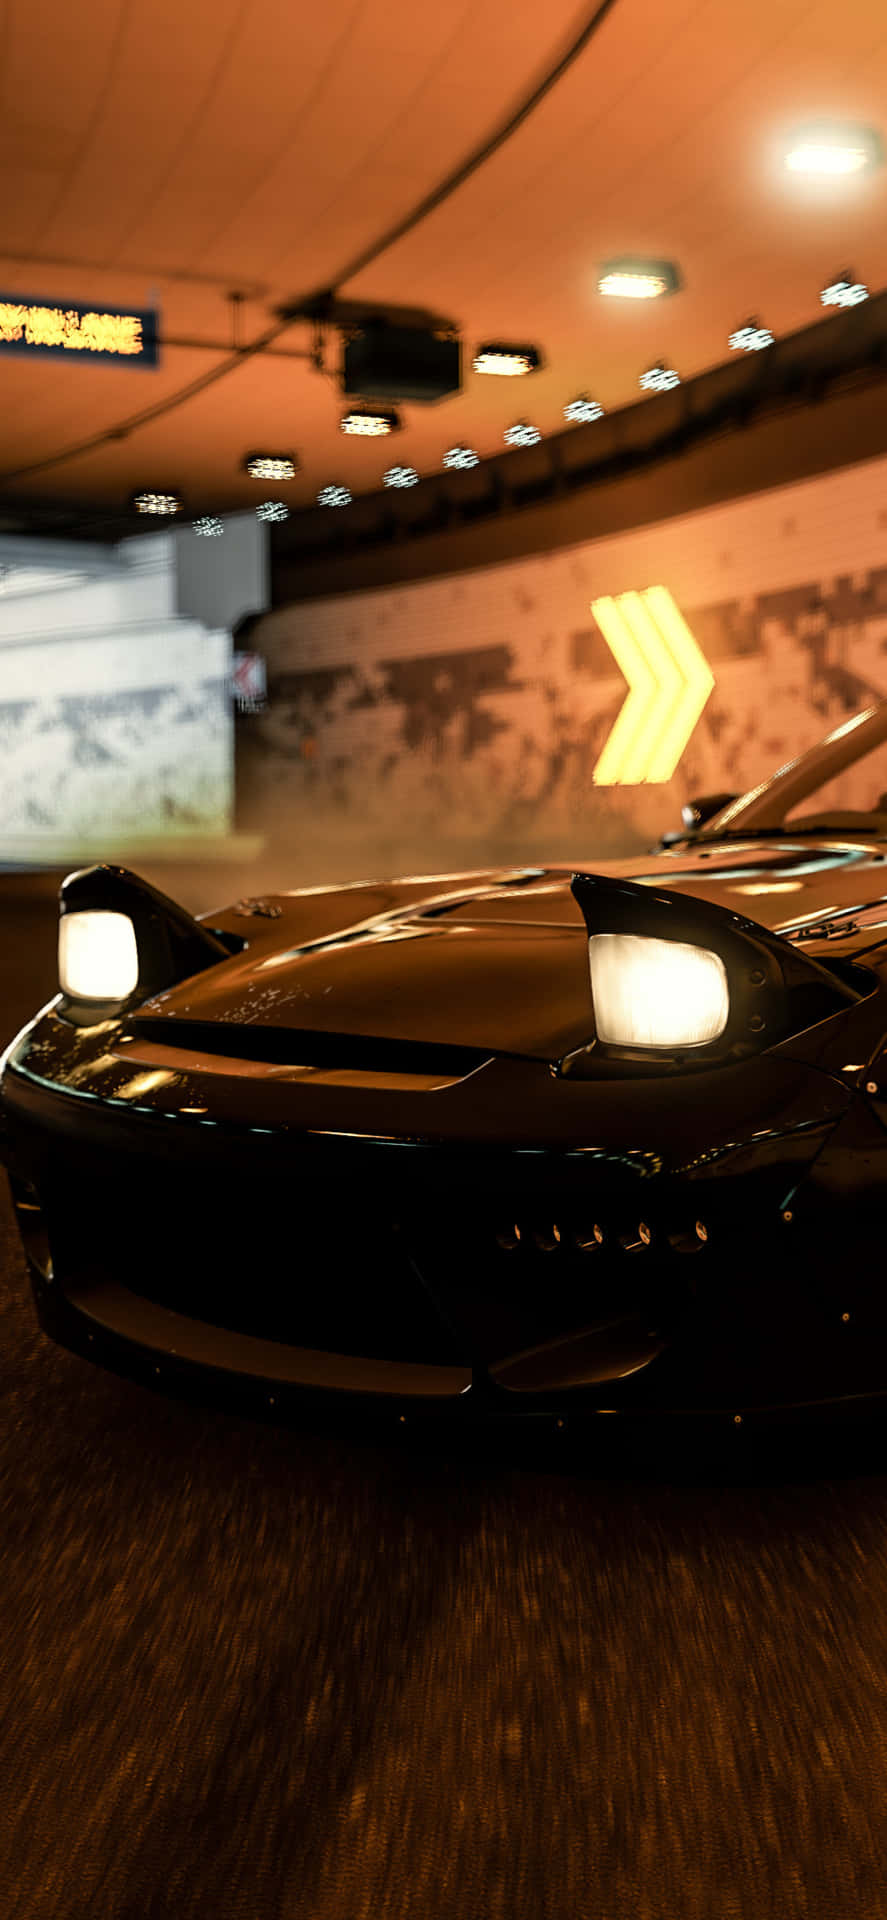 Svartmercedes Iphone X Forza Motorsport 7 Bakgrundsbild